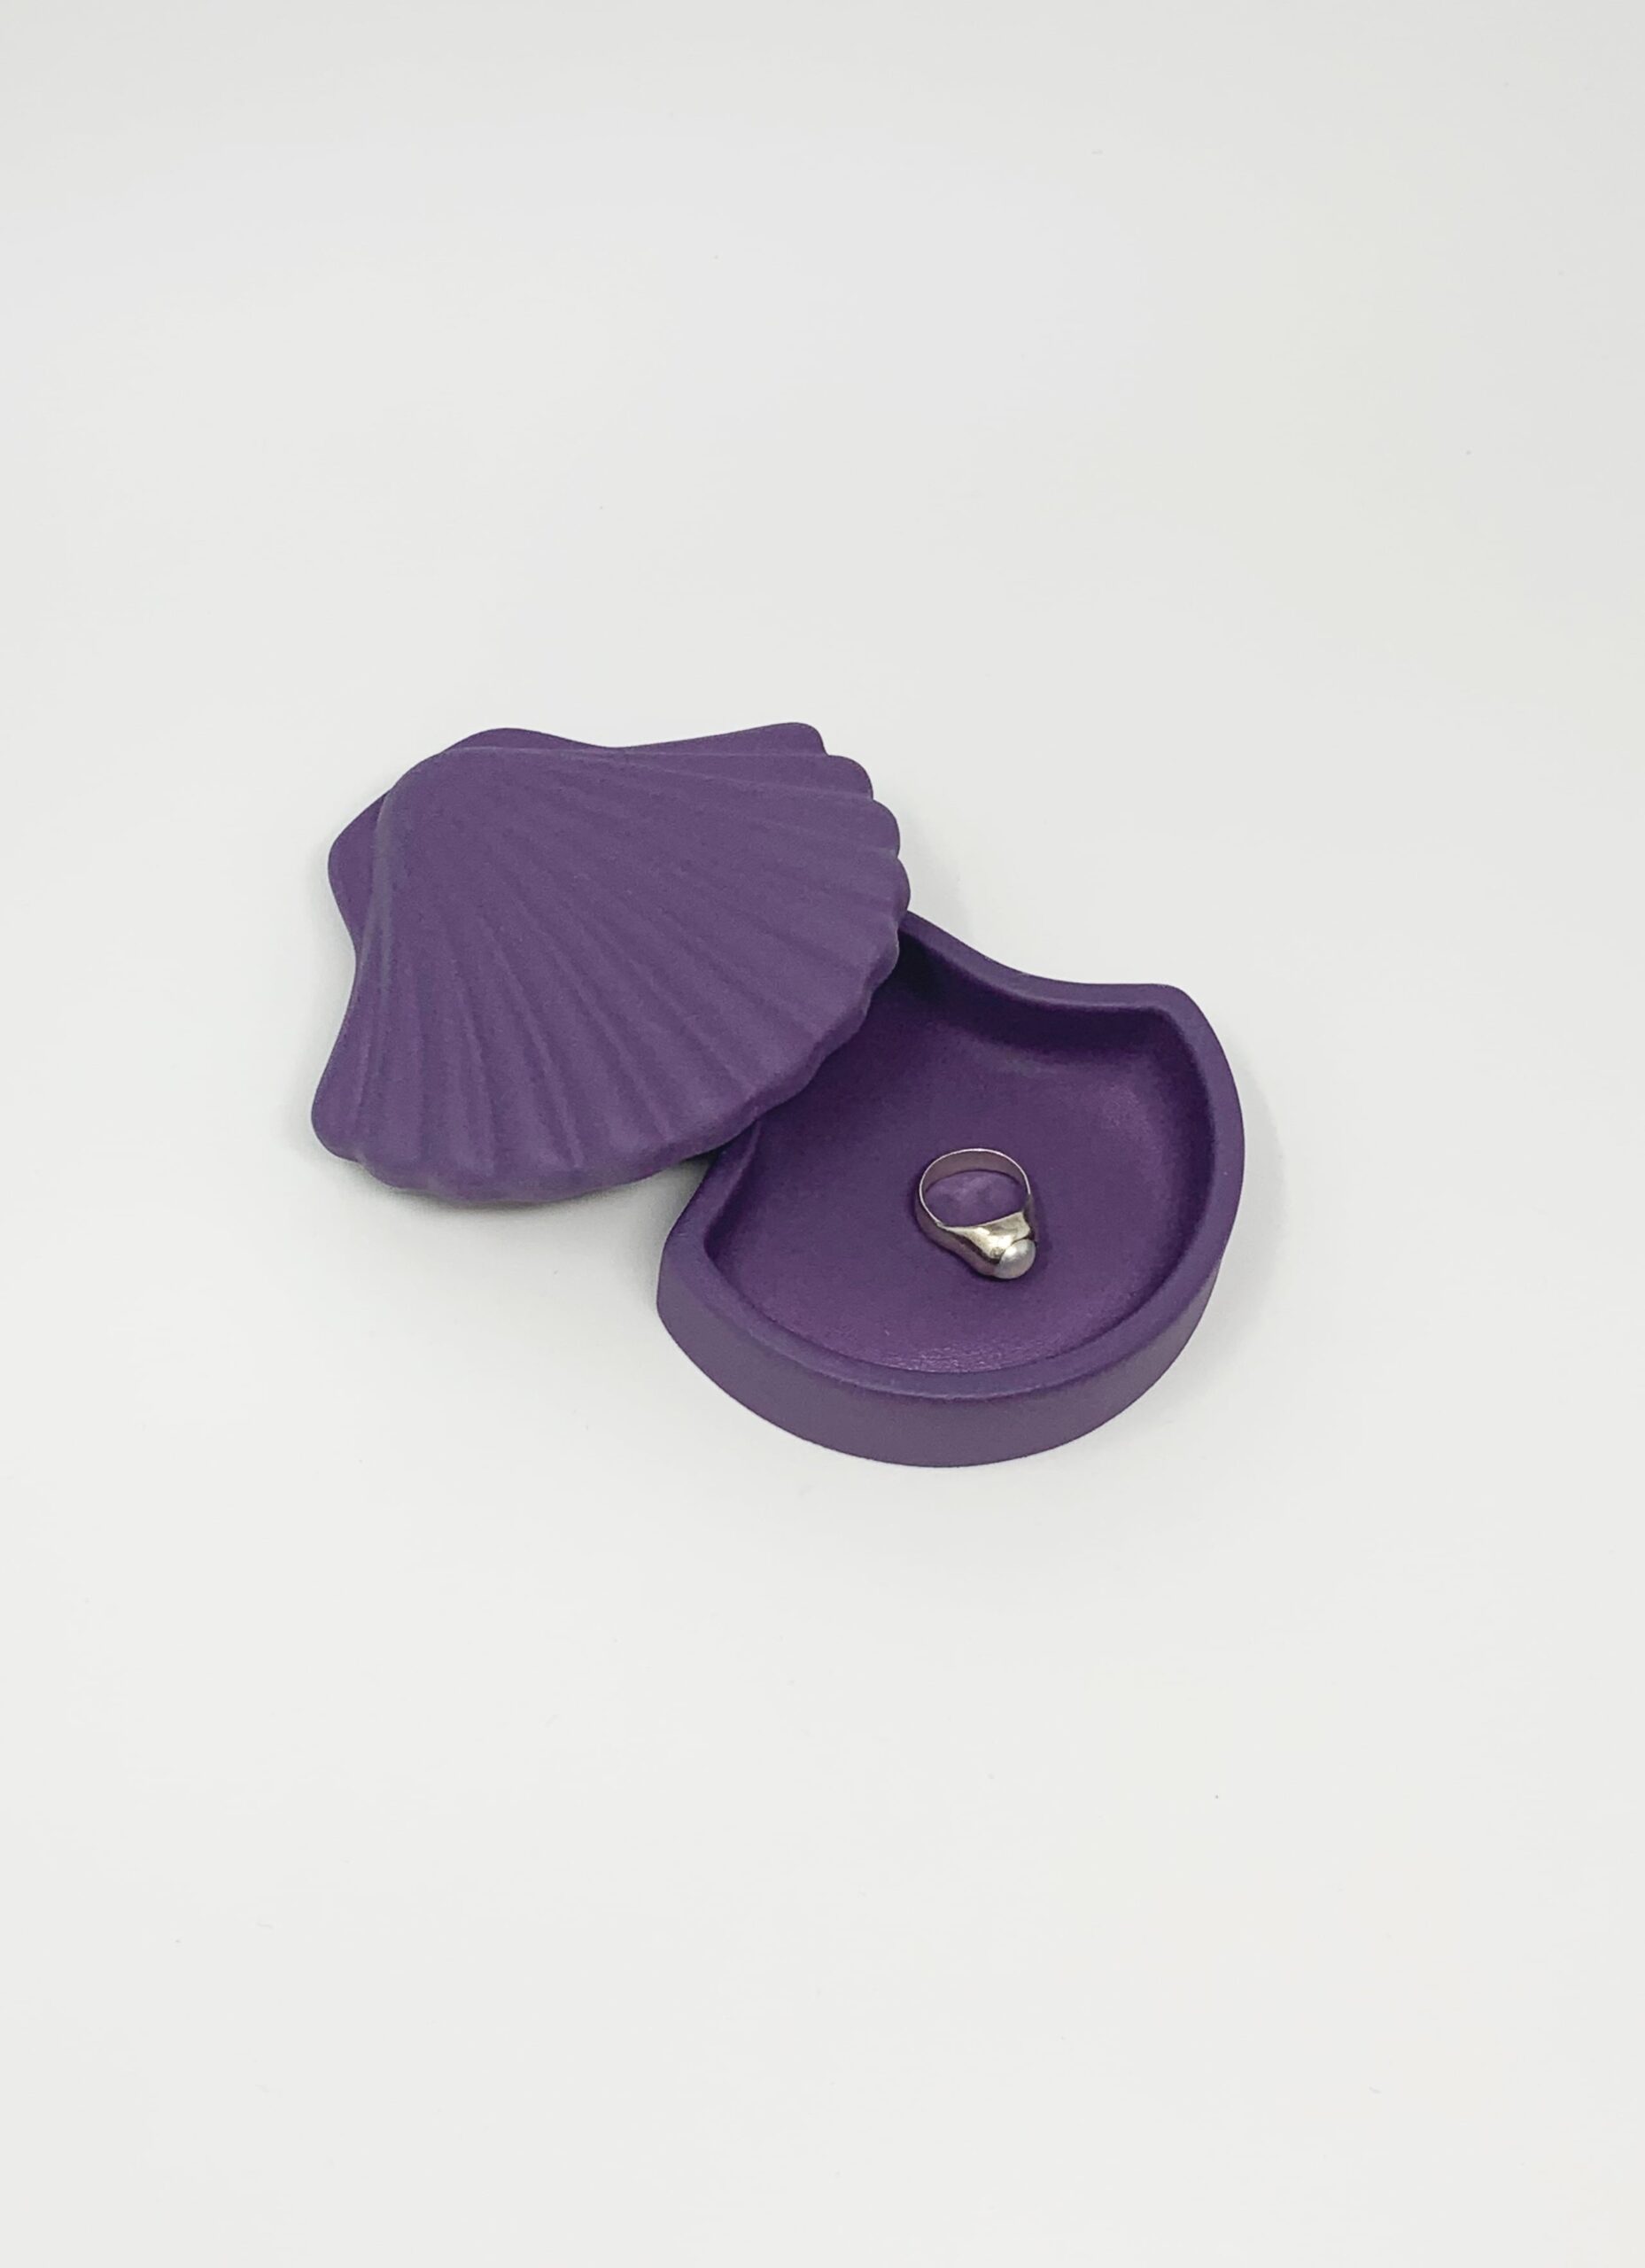 Los Objetos Decorativos - Seashell Box - Mauve